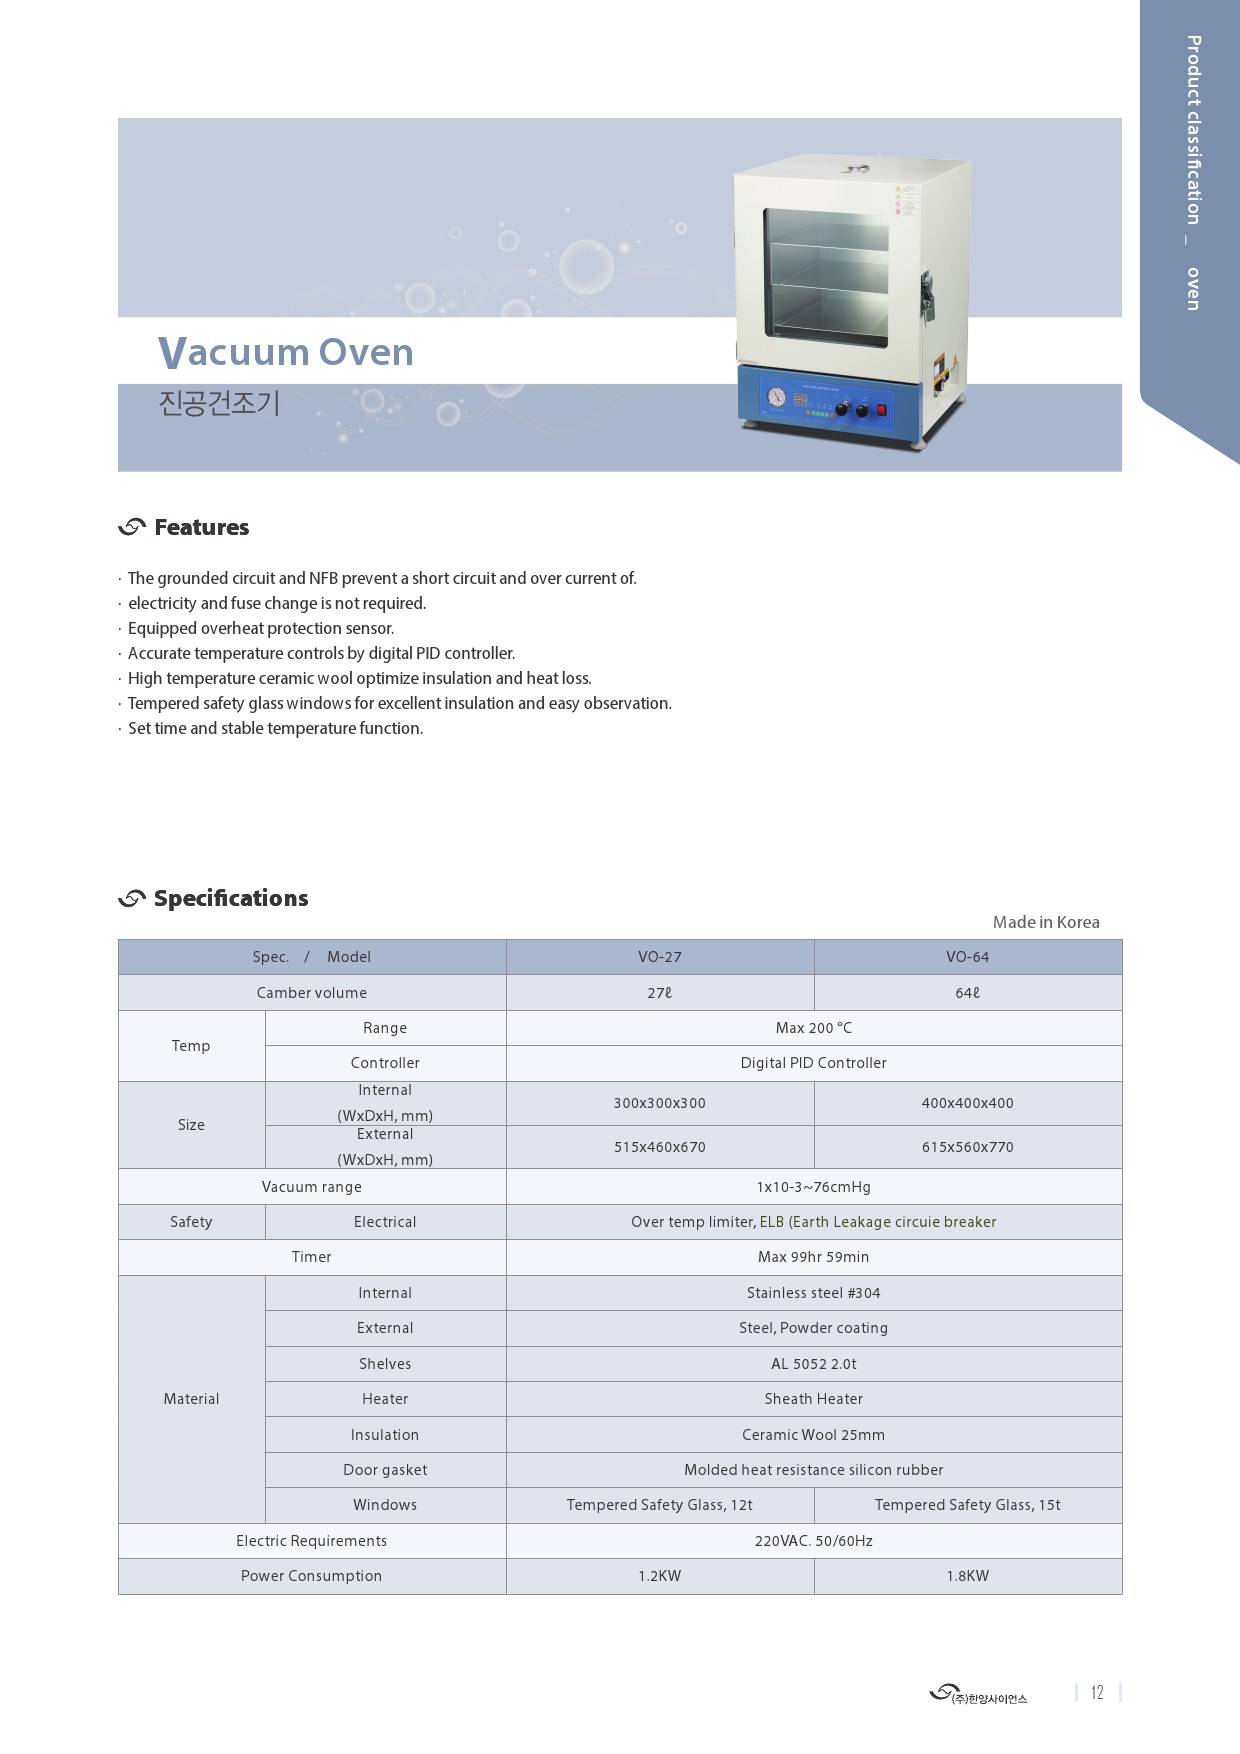 HYSC_Introduction_Vacuum Oven-1.jpg